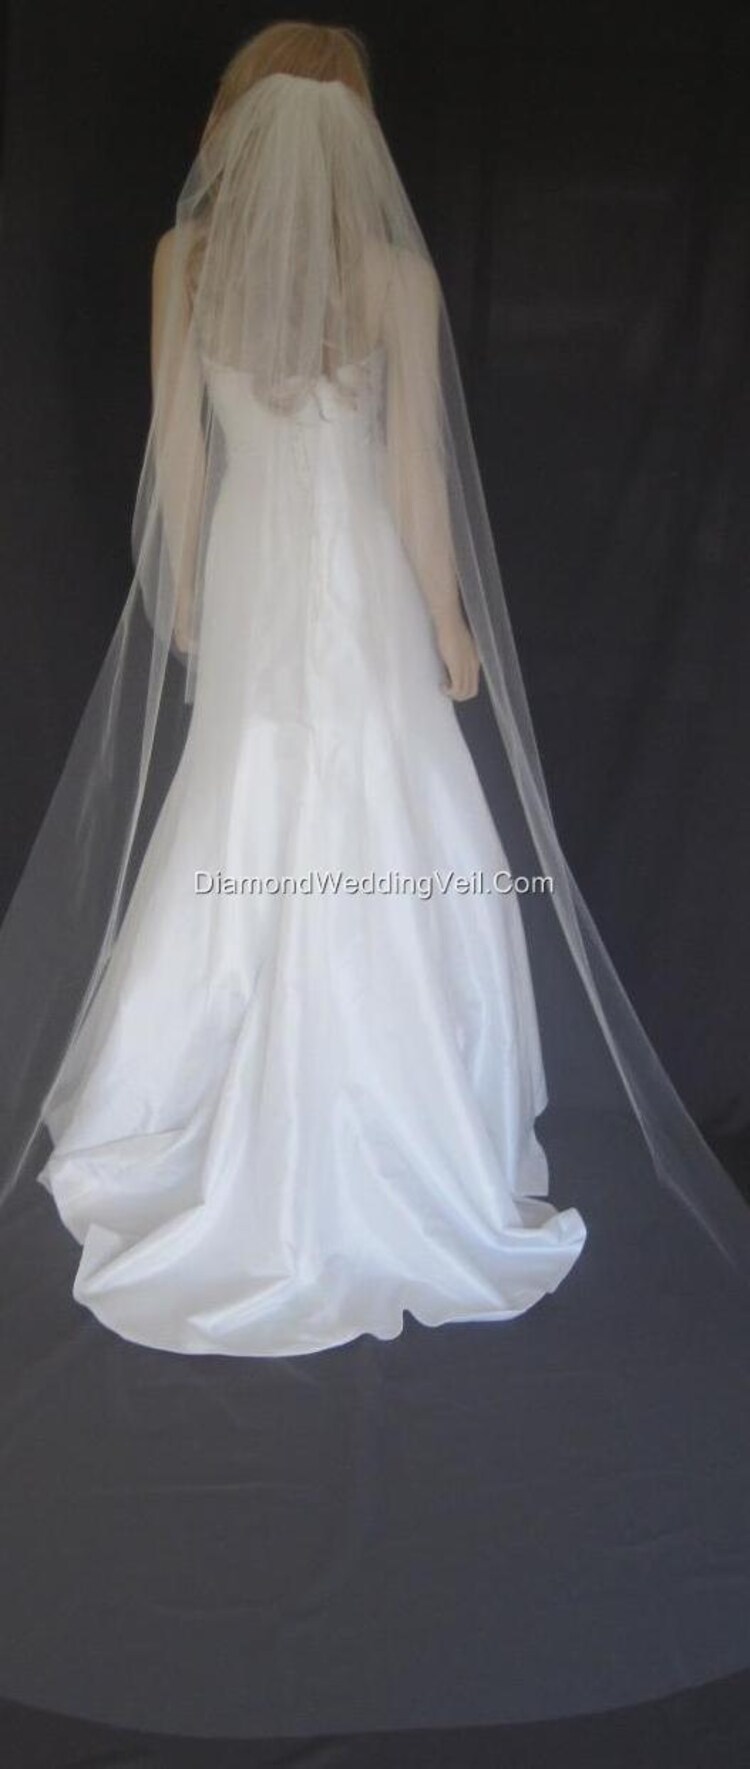 2 tier blusher veil long Veil wedding bridal veils by BridalStar